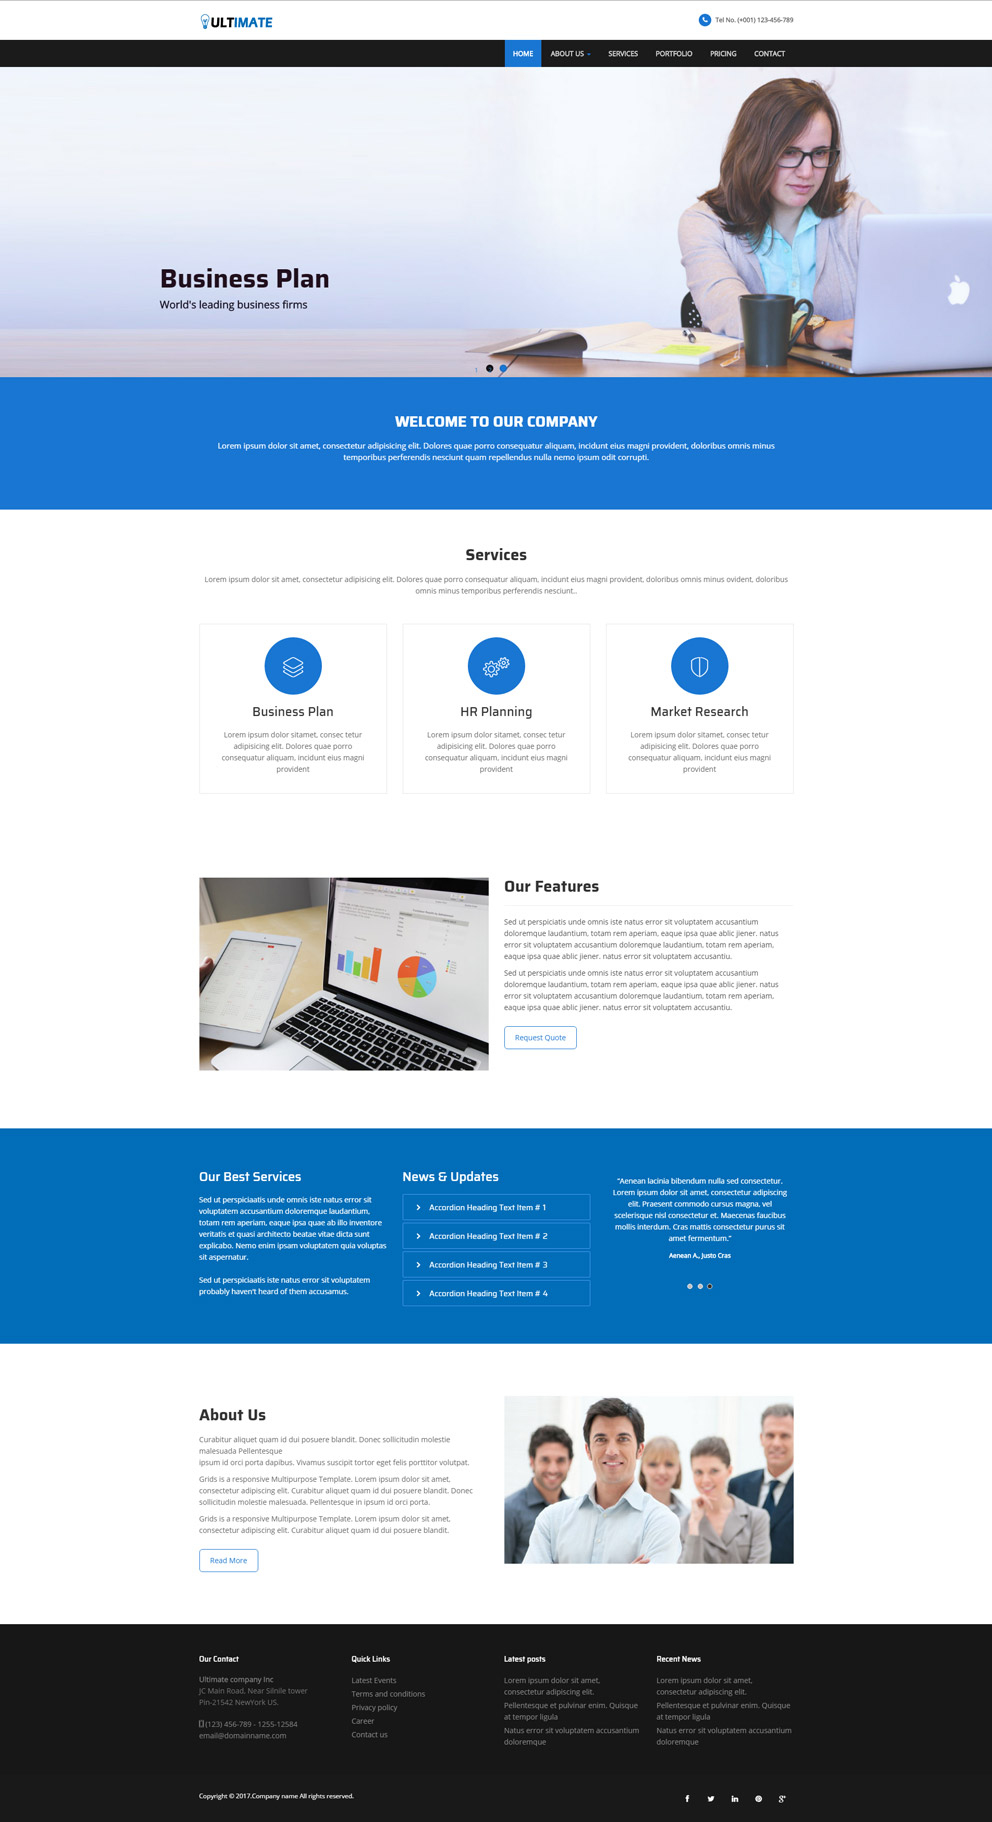  Bootstrap蓝色整洁企业网站模板 - ultimate 